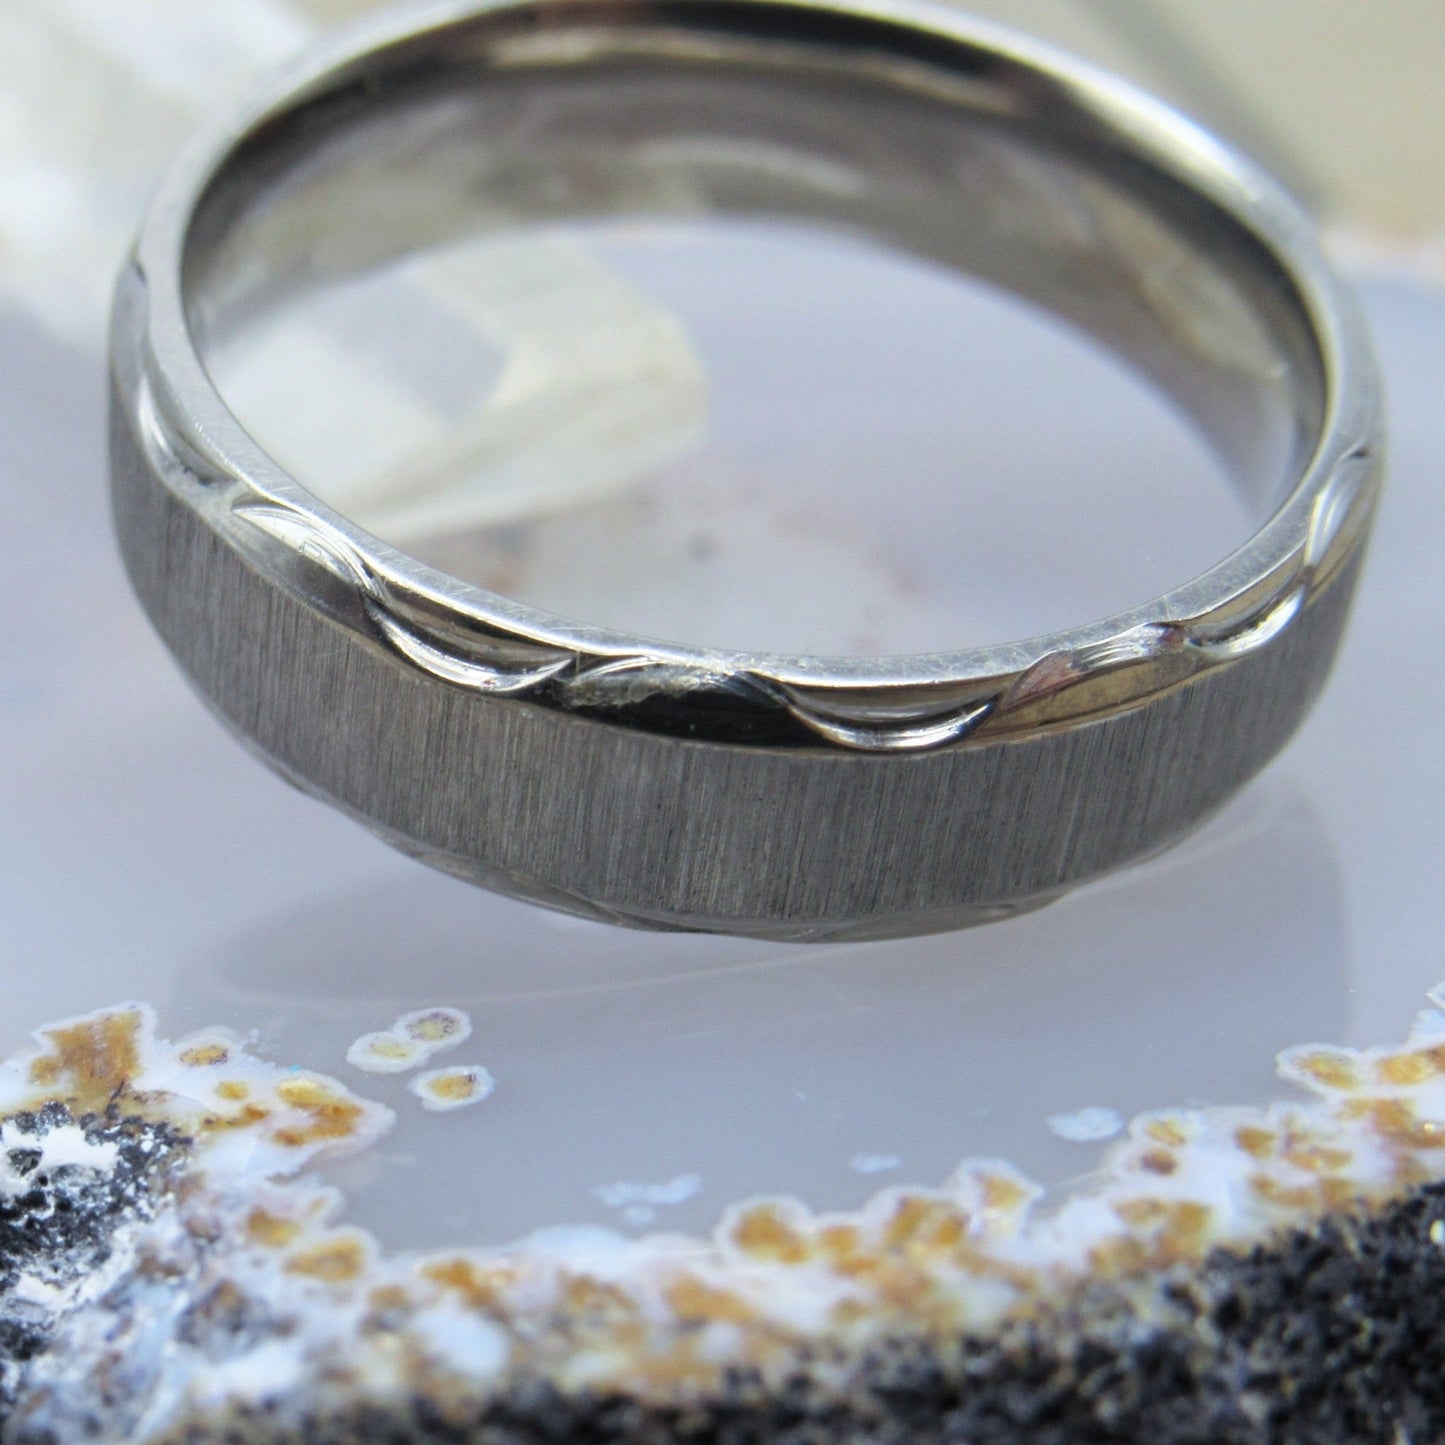 Mens titanium engagement wedding ring size 10 brushed center tribal border design 6mm width hypoallergenic jewelry - Siren Body Jewelry